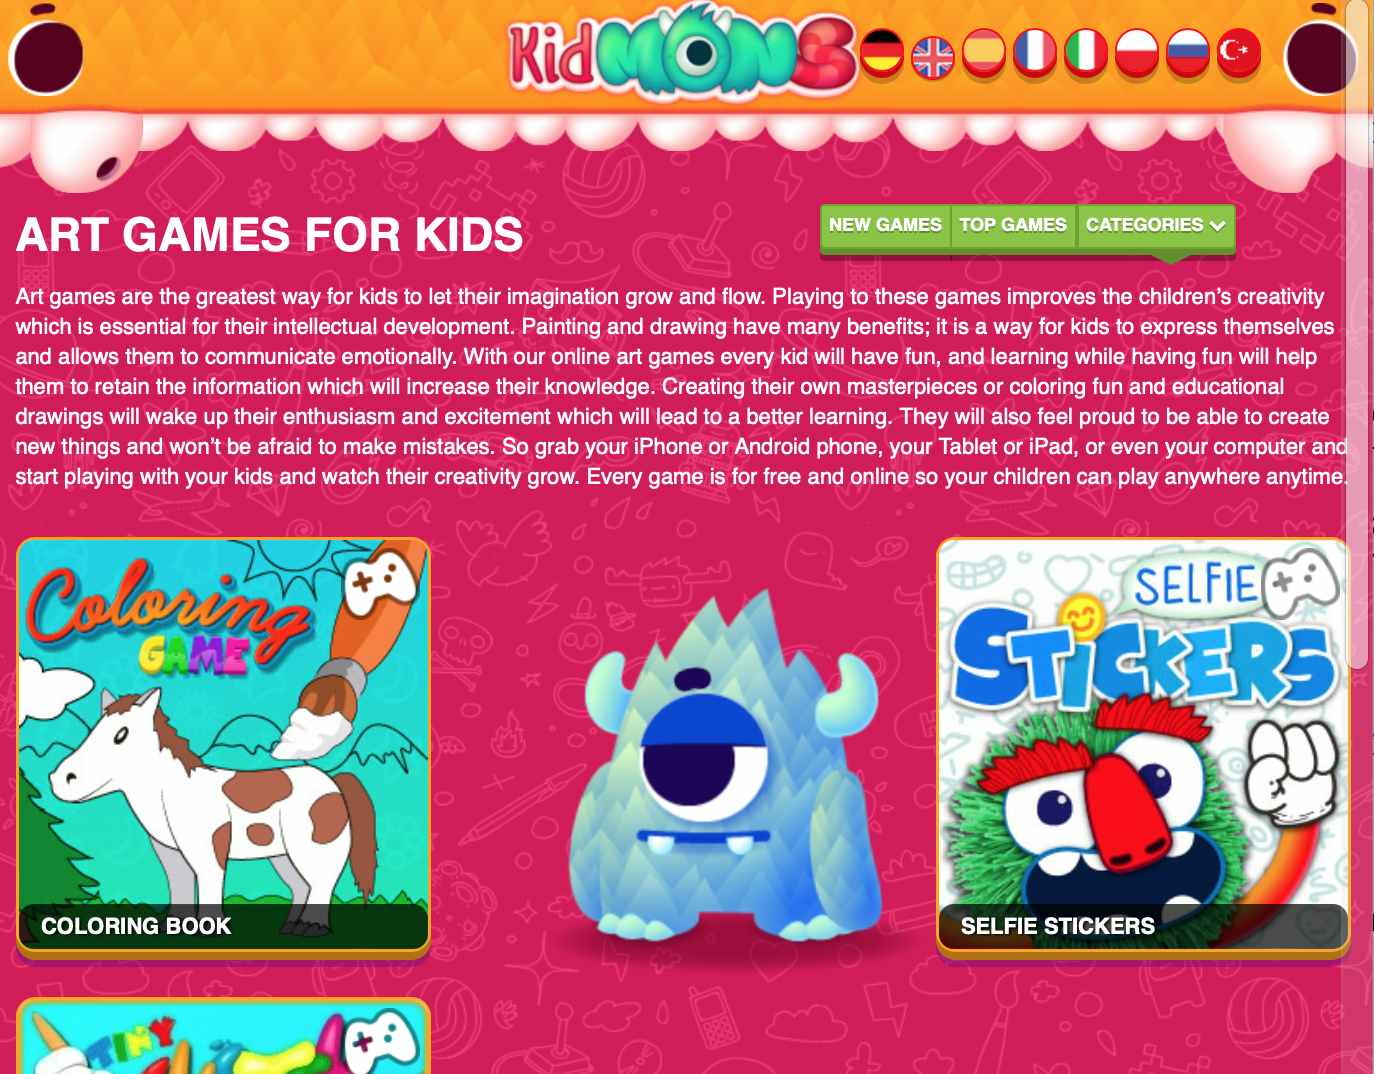 A screenshot of KidMons art games for kids webpage.